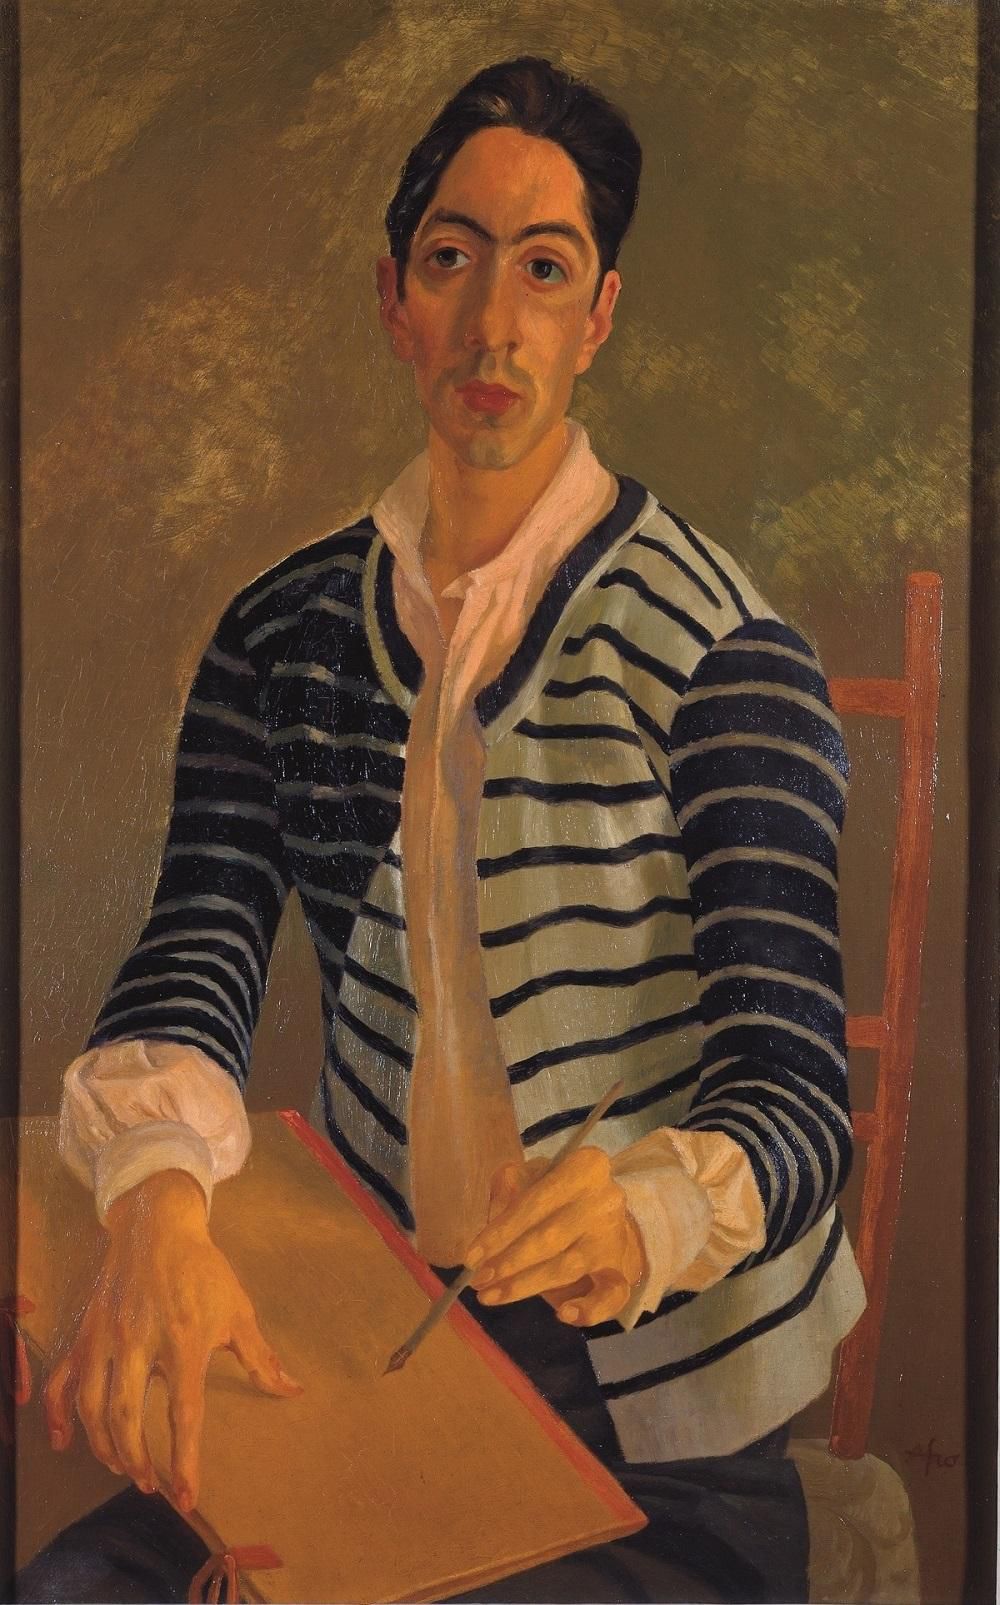 The 1936 self-portrait.